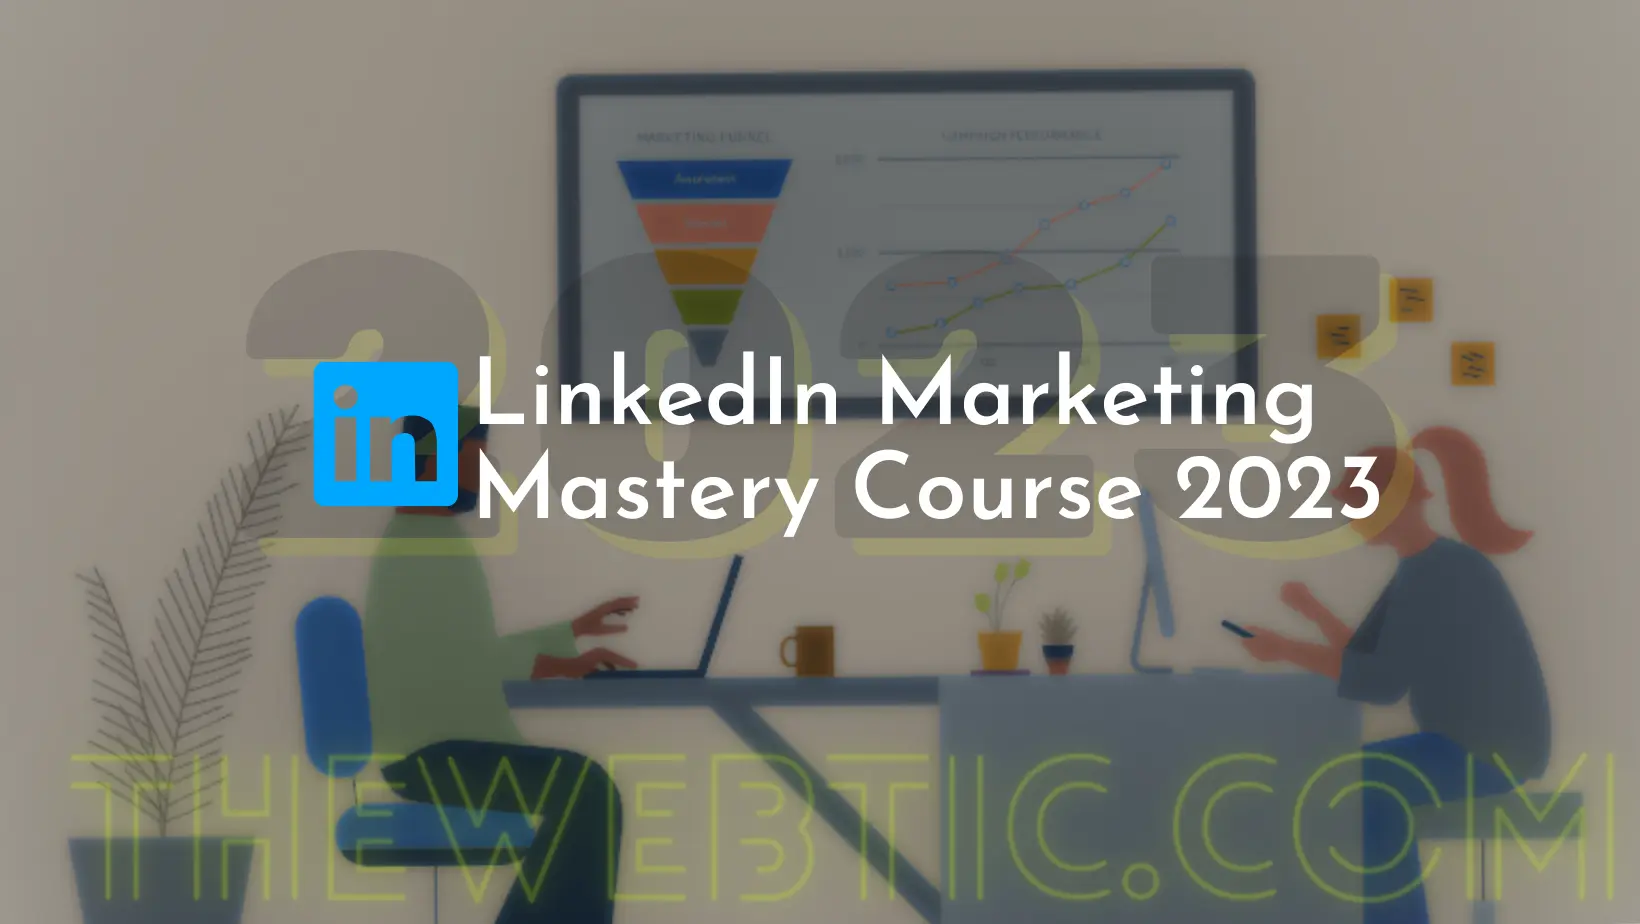 LinkedIn Marketing Mastery Course 2023